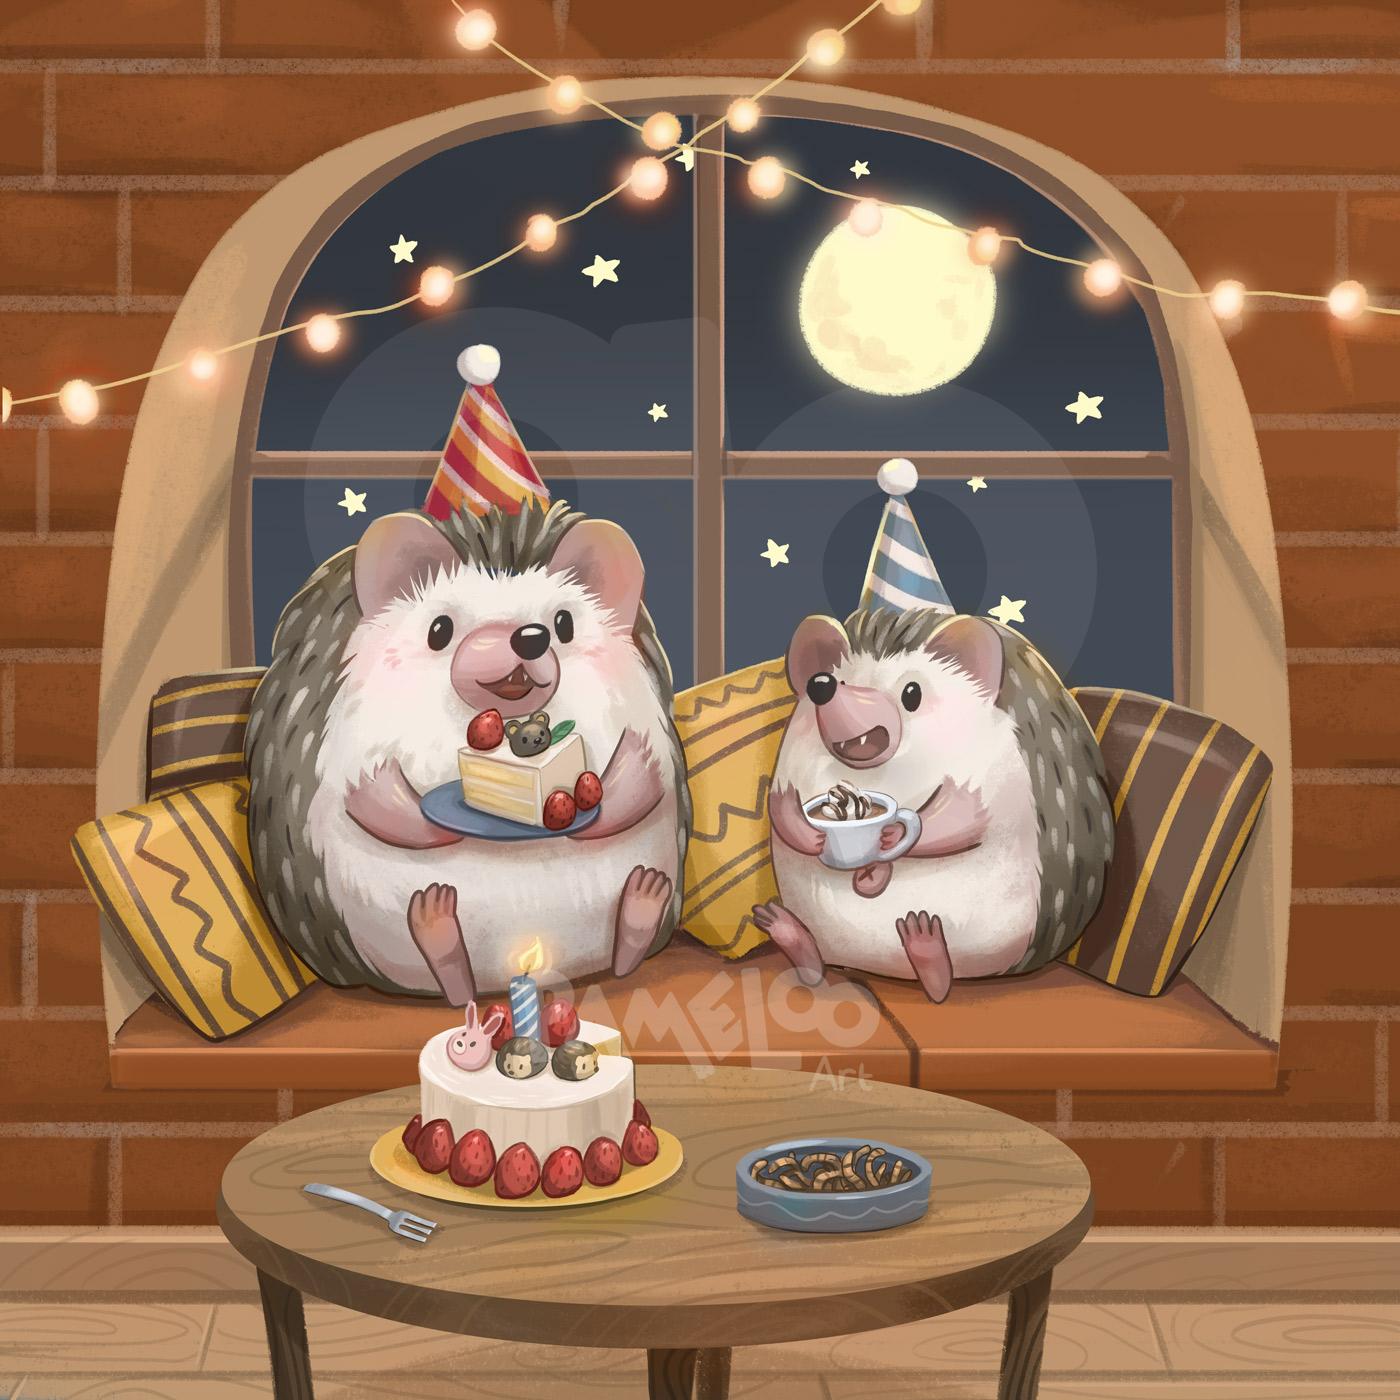 Hedgehog Party